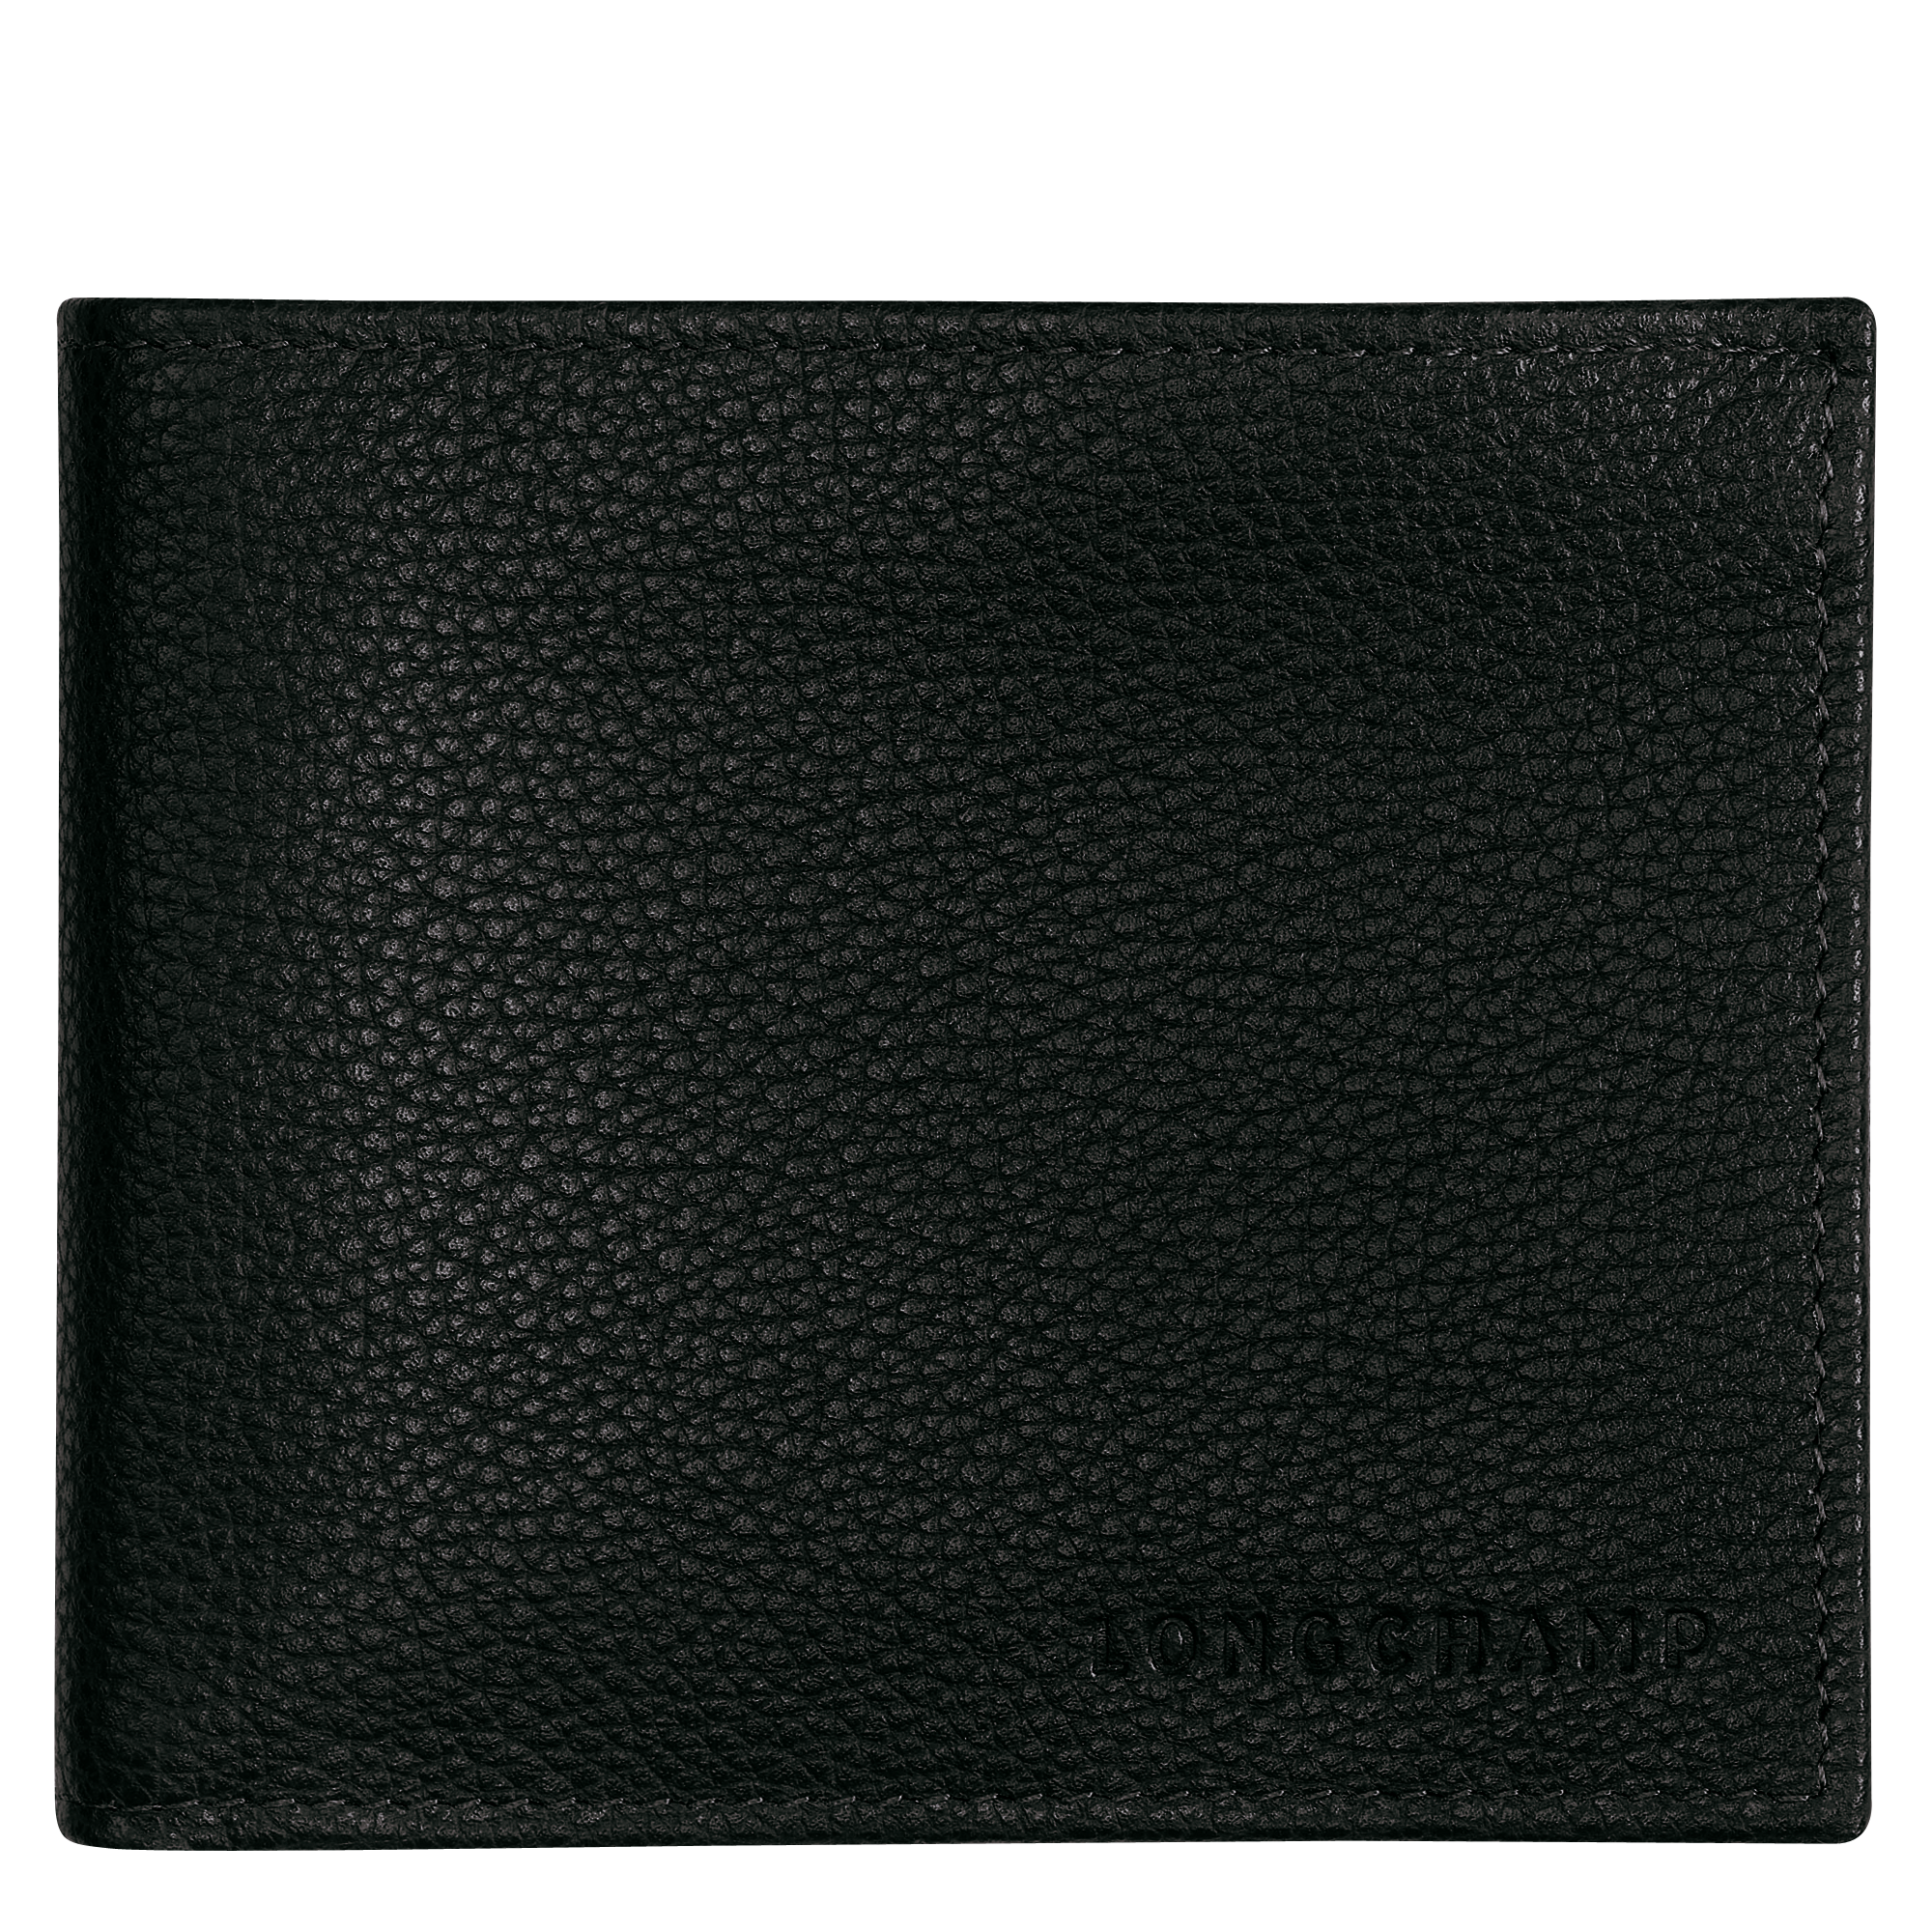 longchamp leather wallet